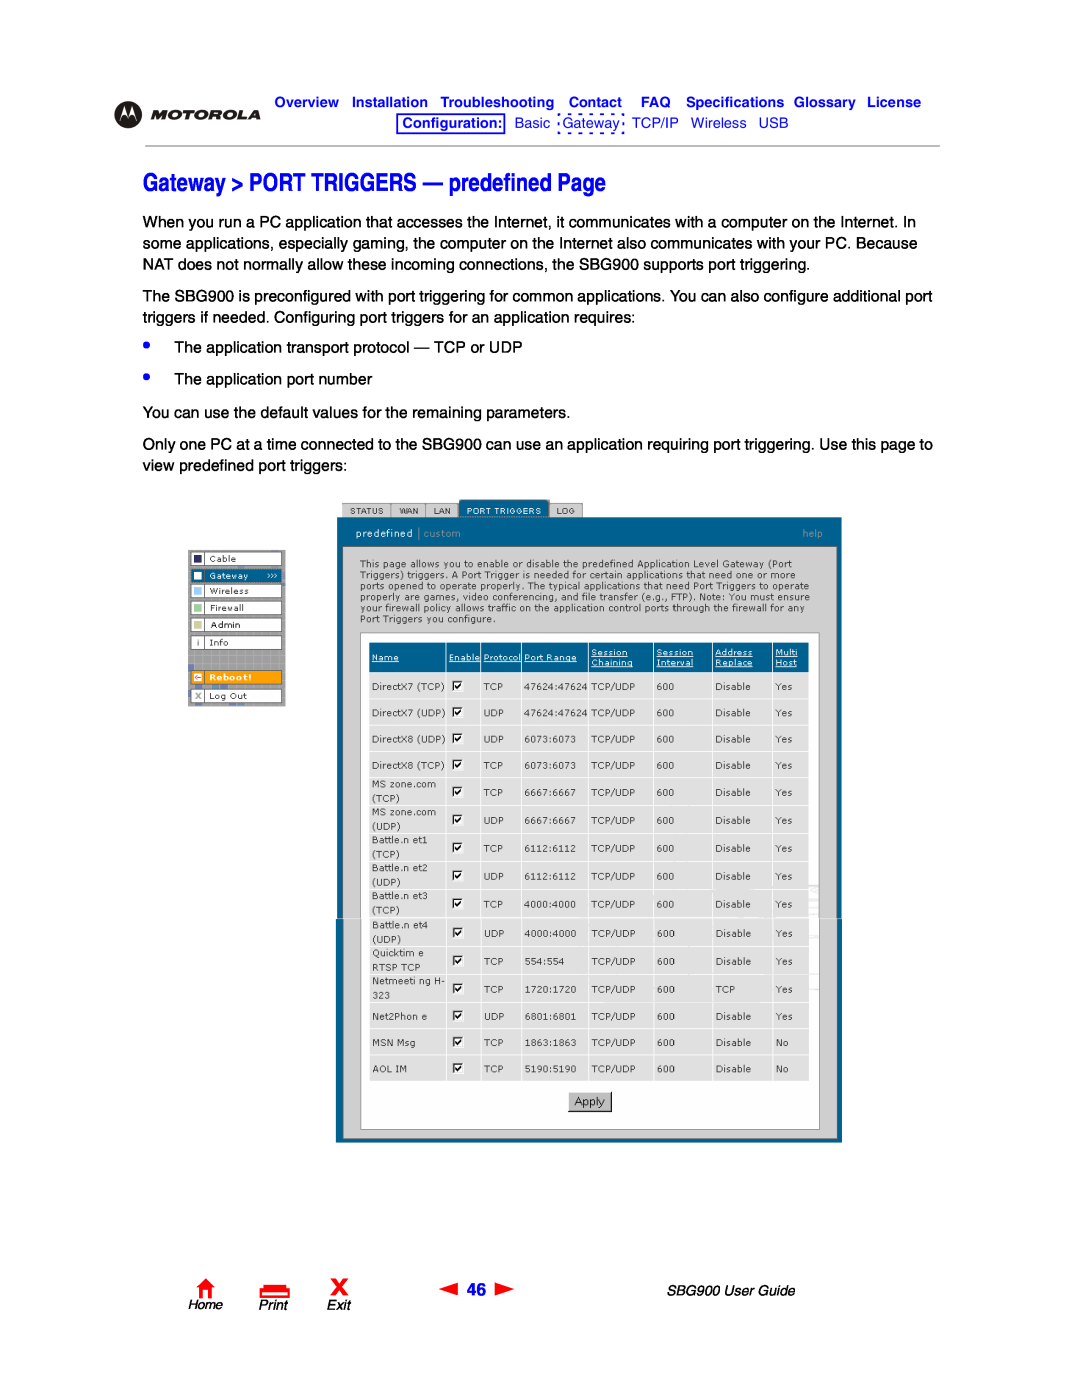 Motorola SBG900 manual Gateway PORT TRIGGERS - predefined Page 